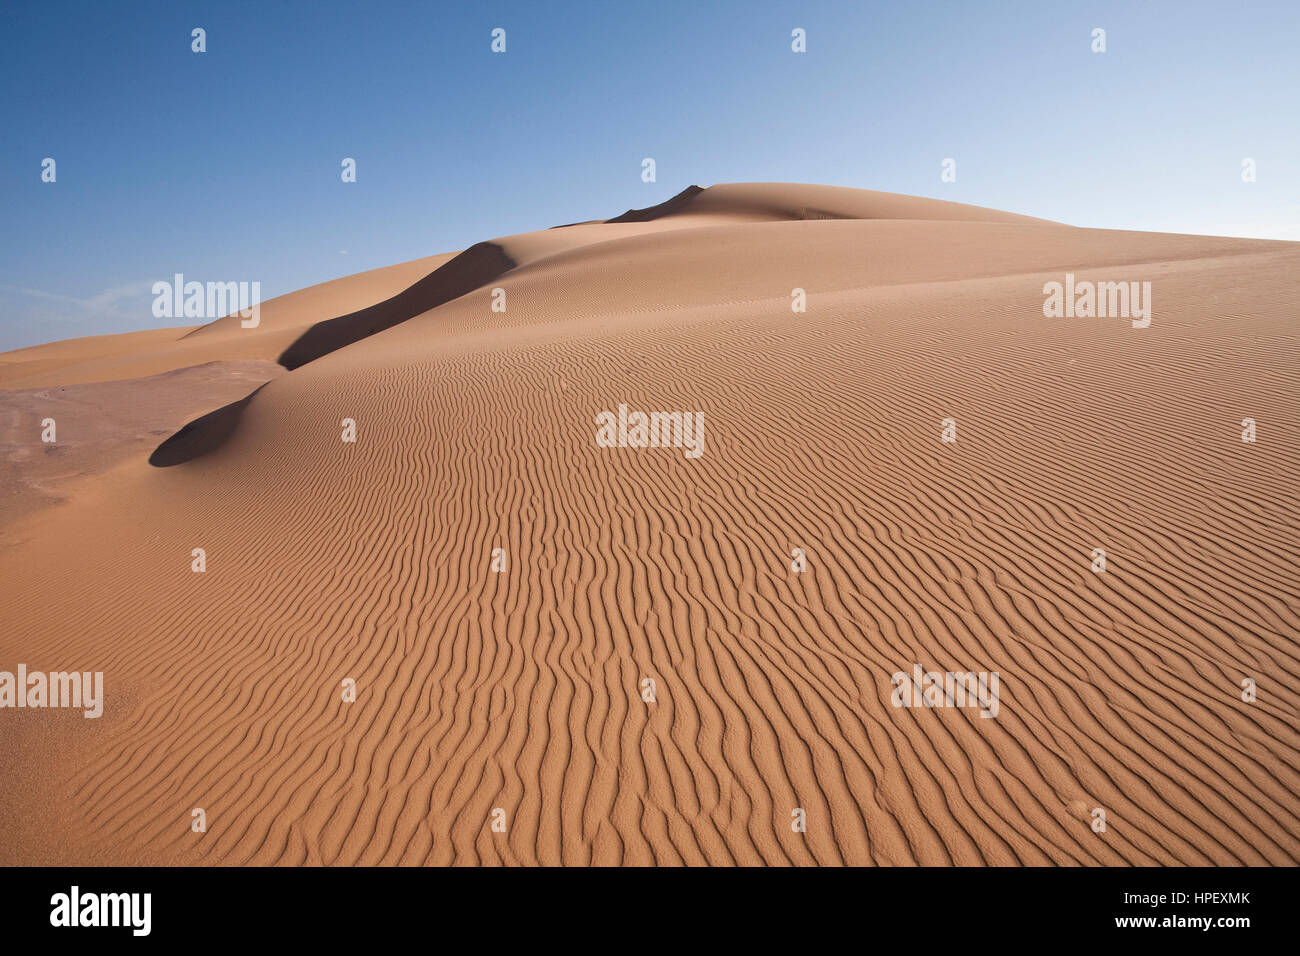 Dune called 'Sultan dune', Oman Stock Photo